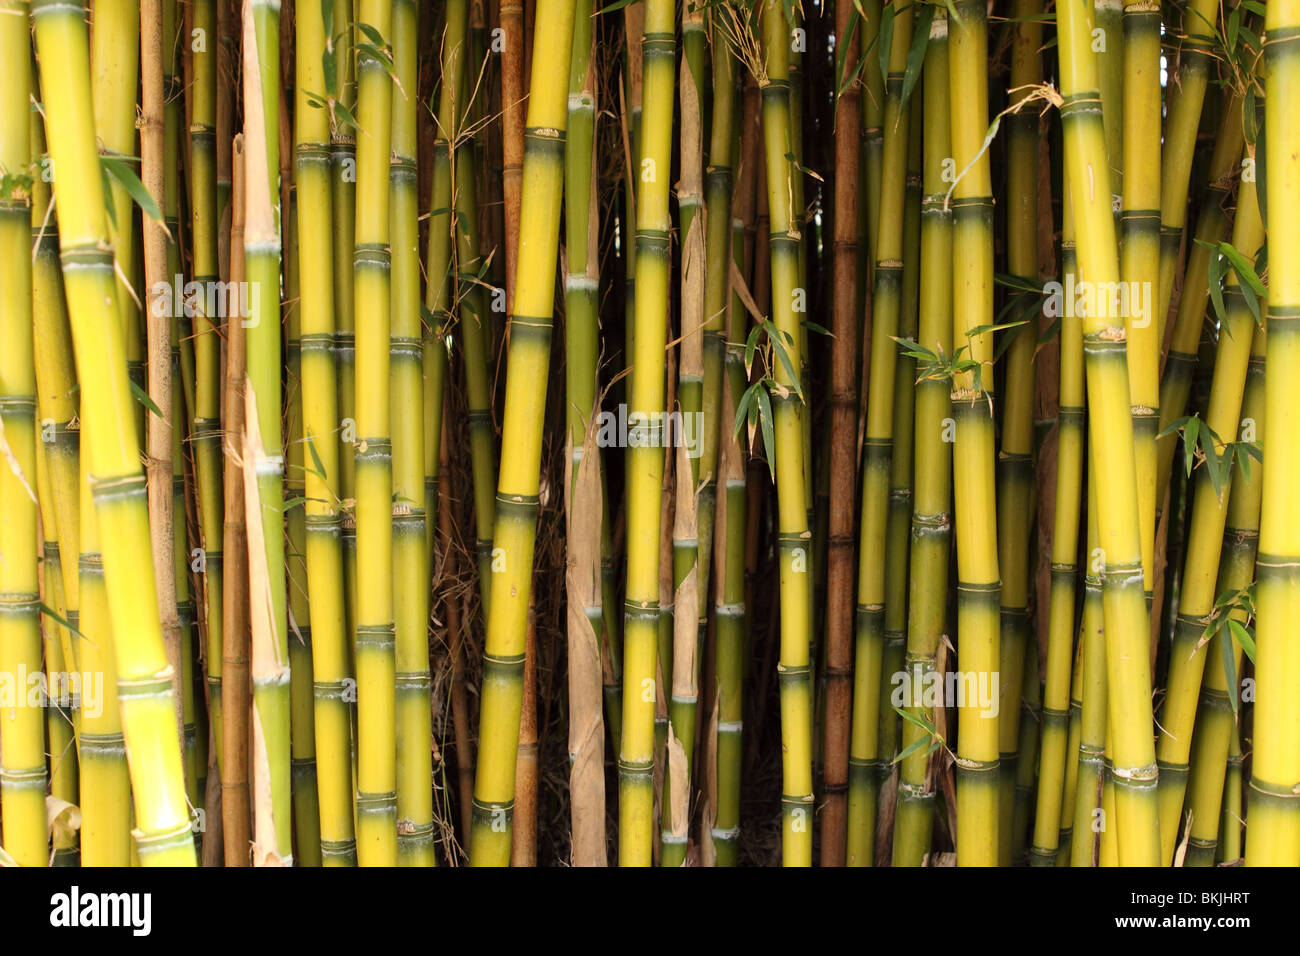 Bamboo grass type Chusquea culeou tall green shoots Stock Photo